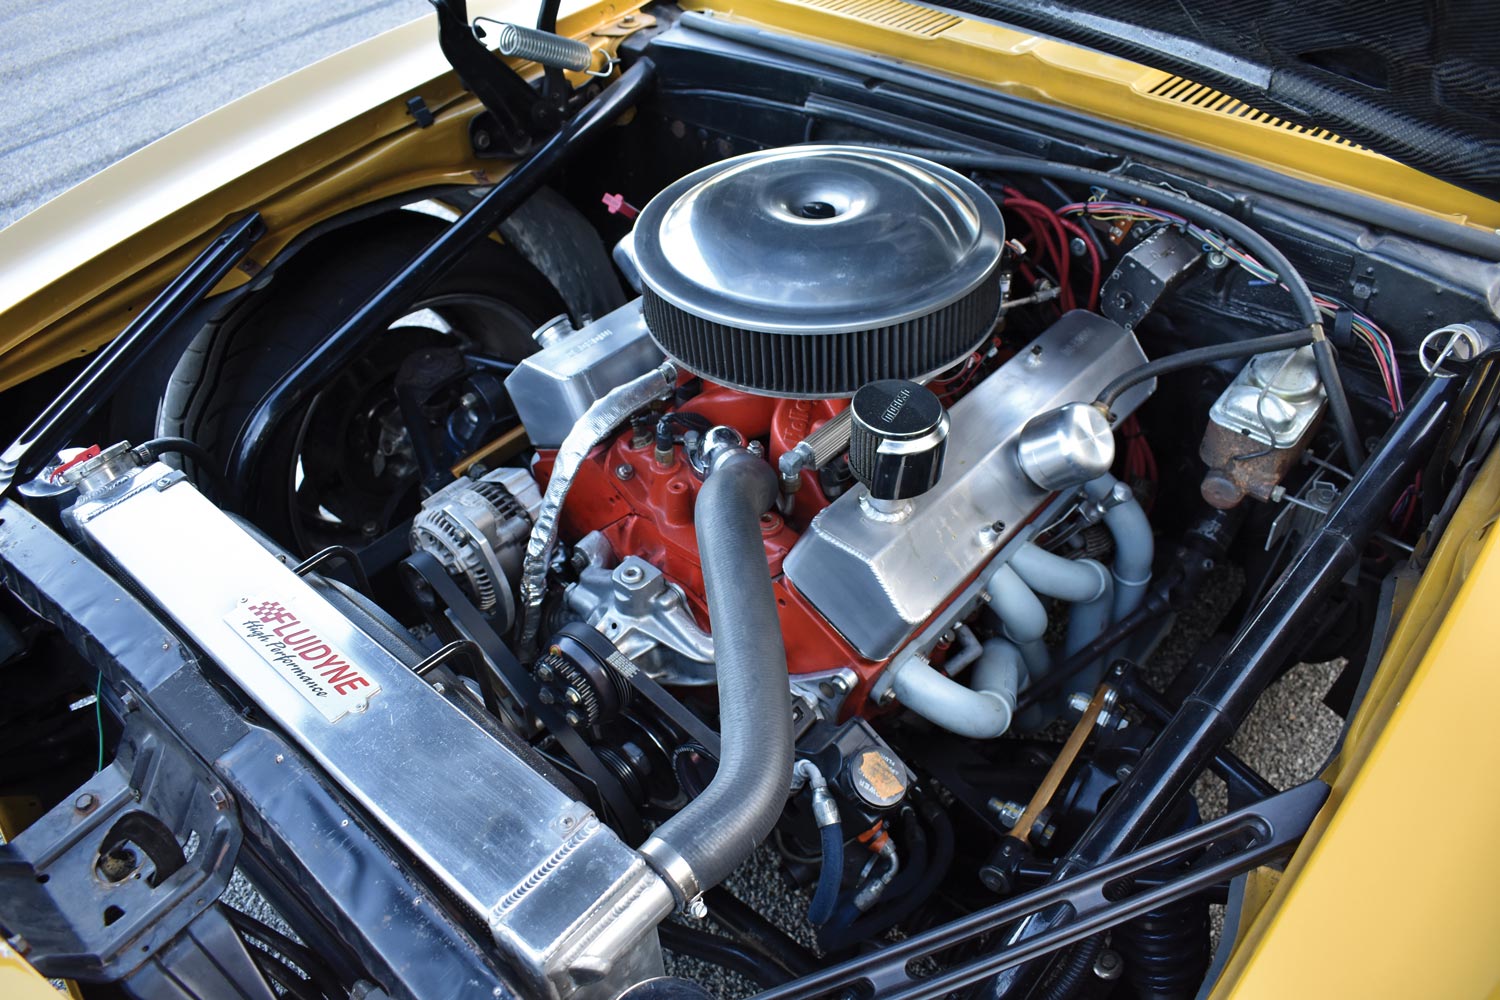 ’68 Camaro's engine